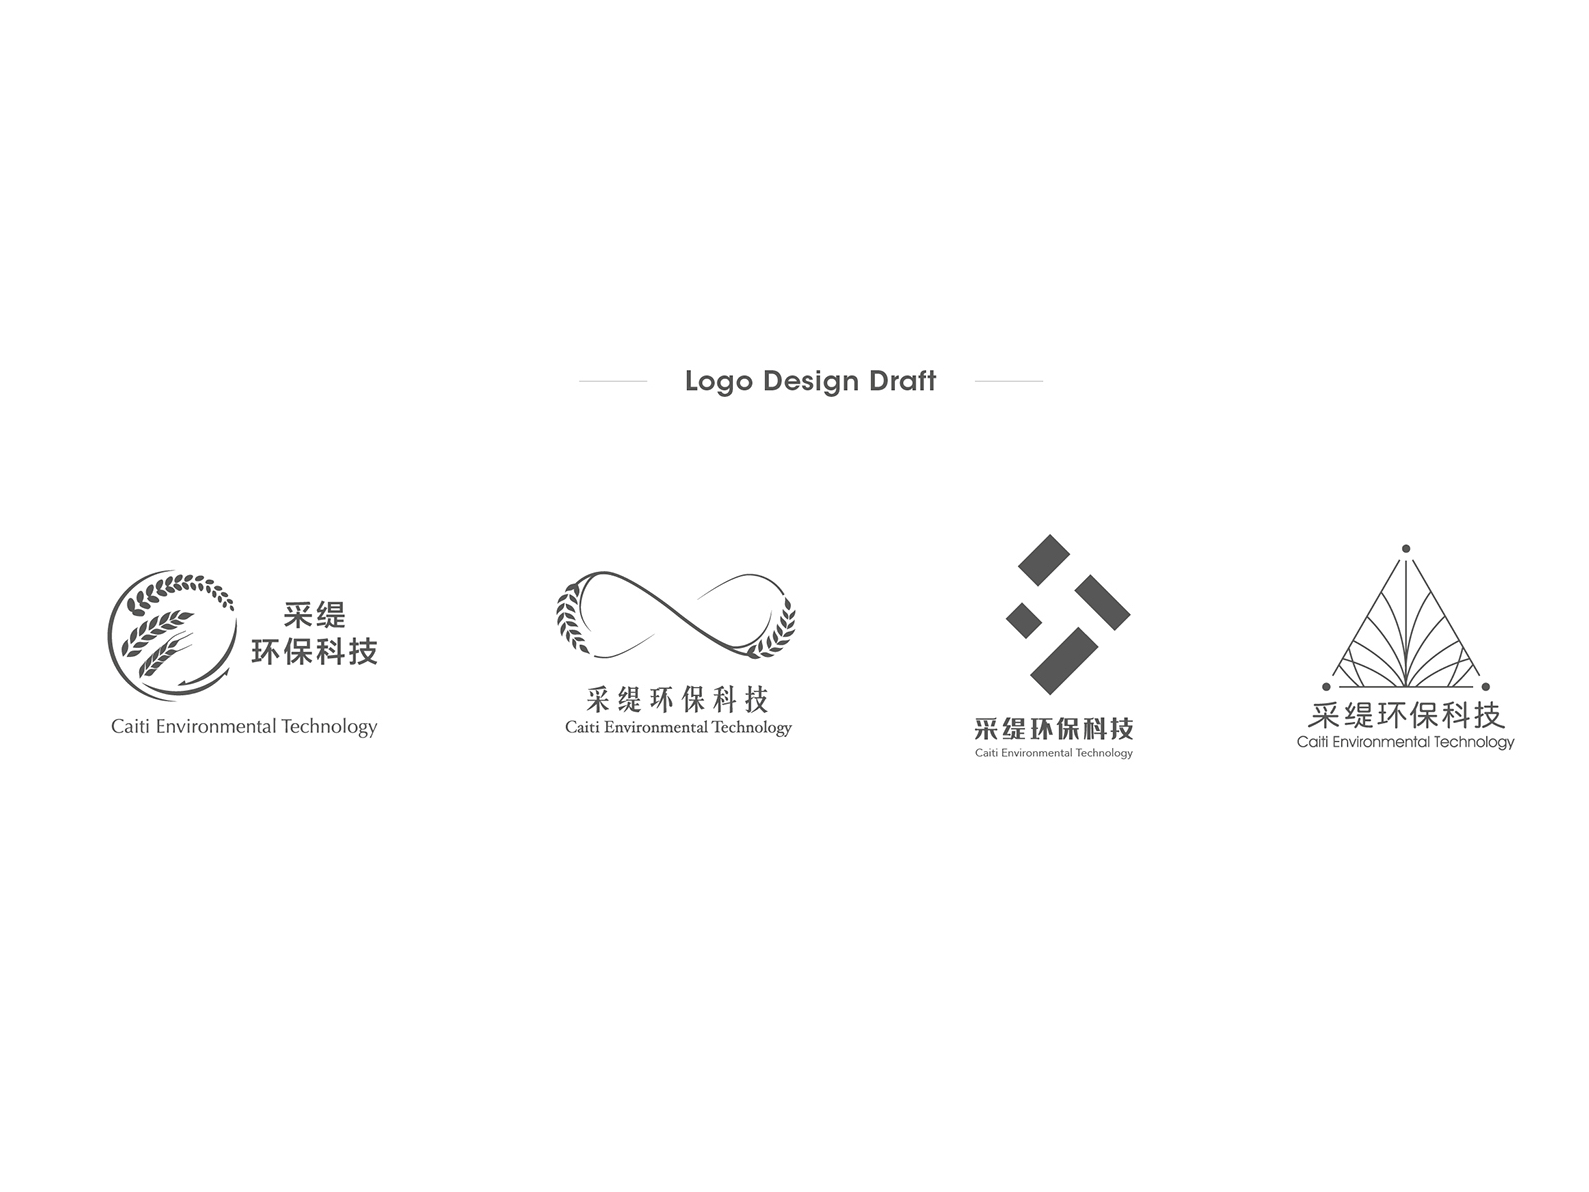 Logo Design Draft by Jube Huang on Dribbble